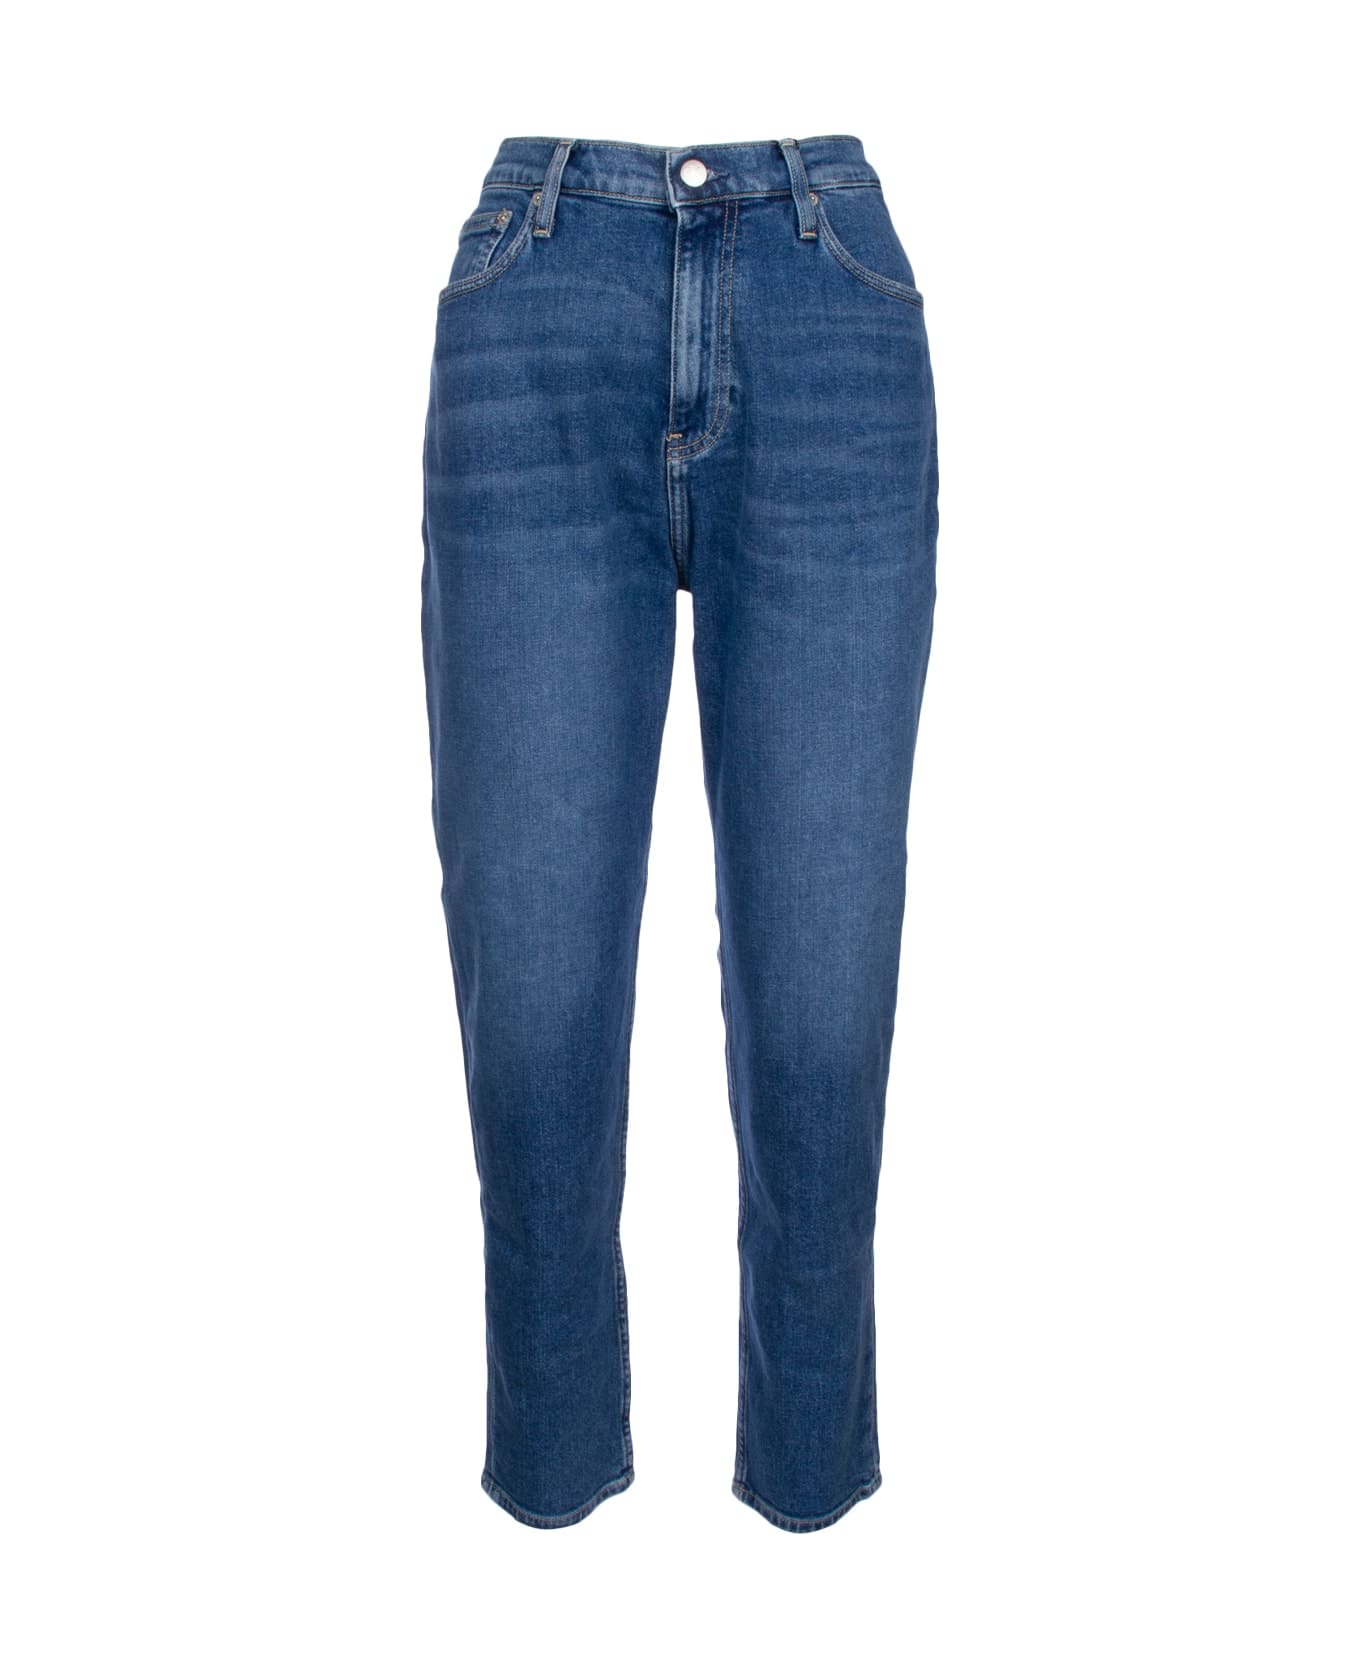 Calvin Klein Jeans Jeans - 1A4 デニム